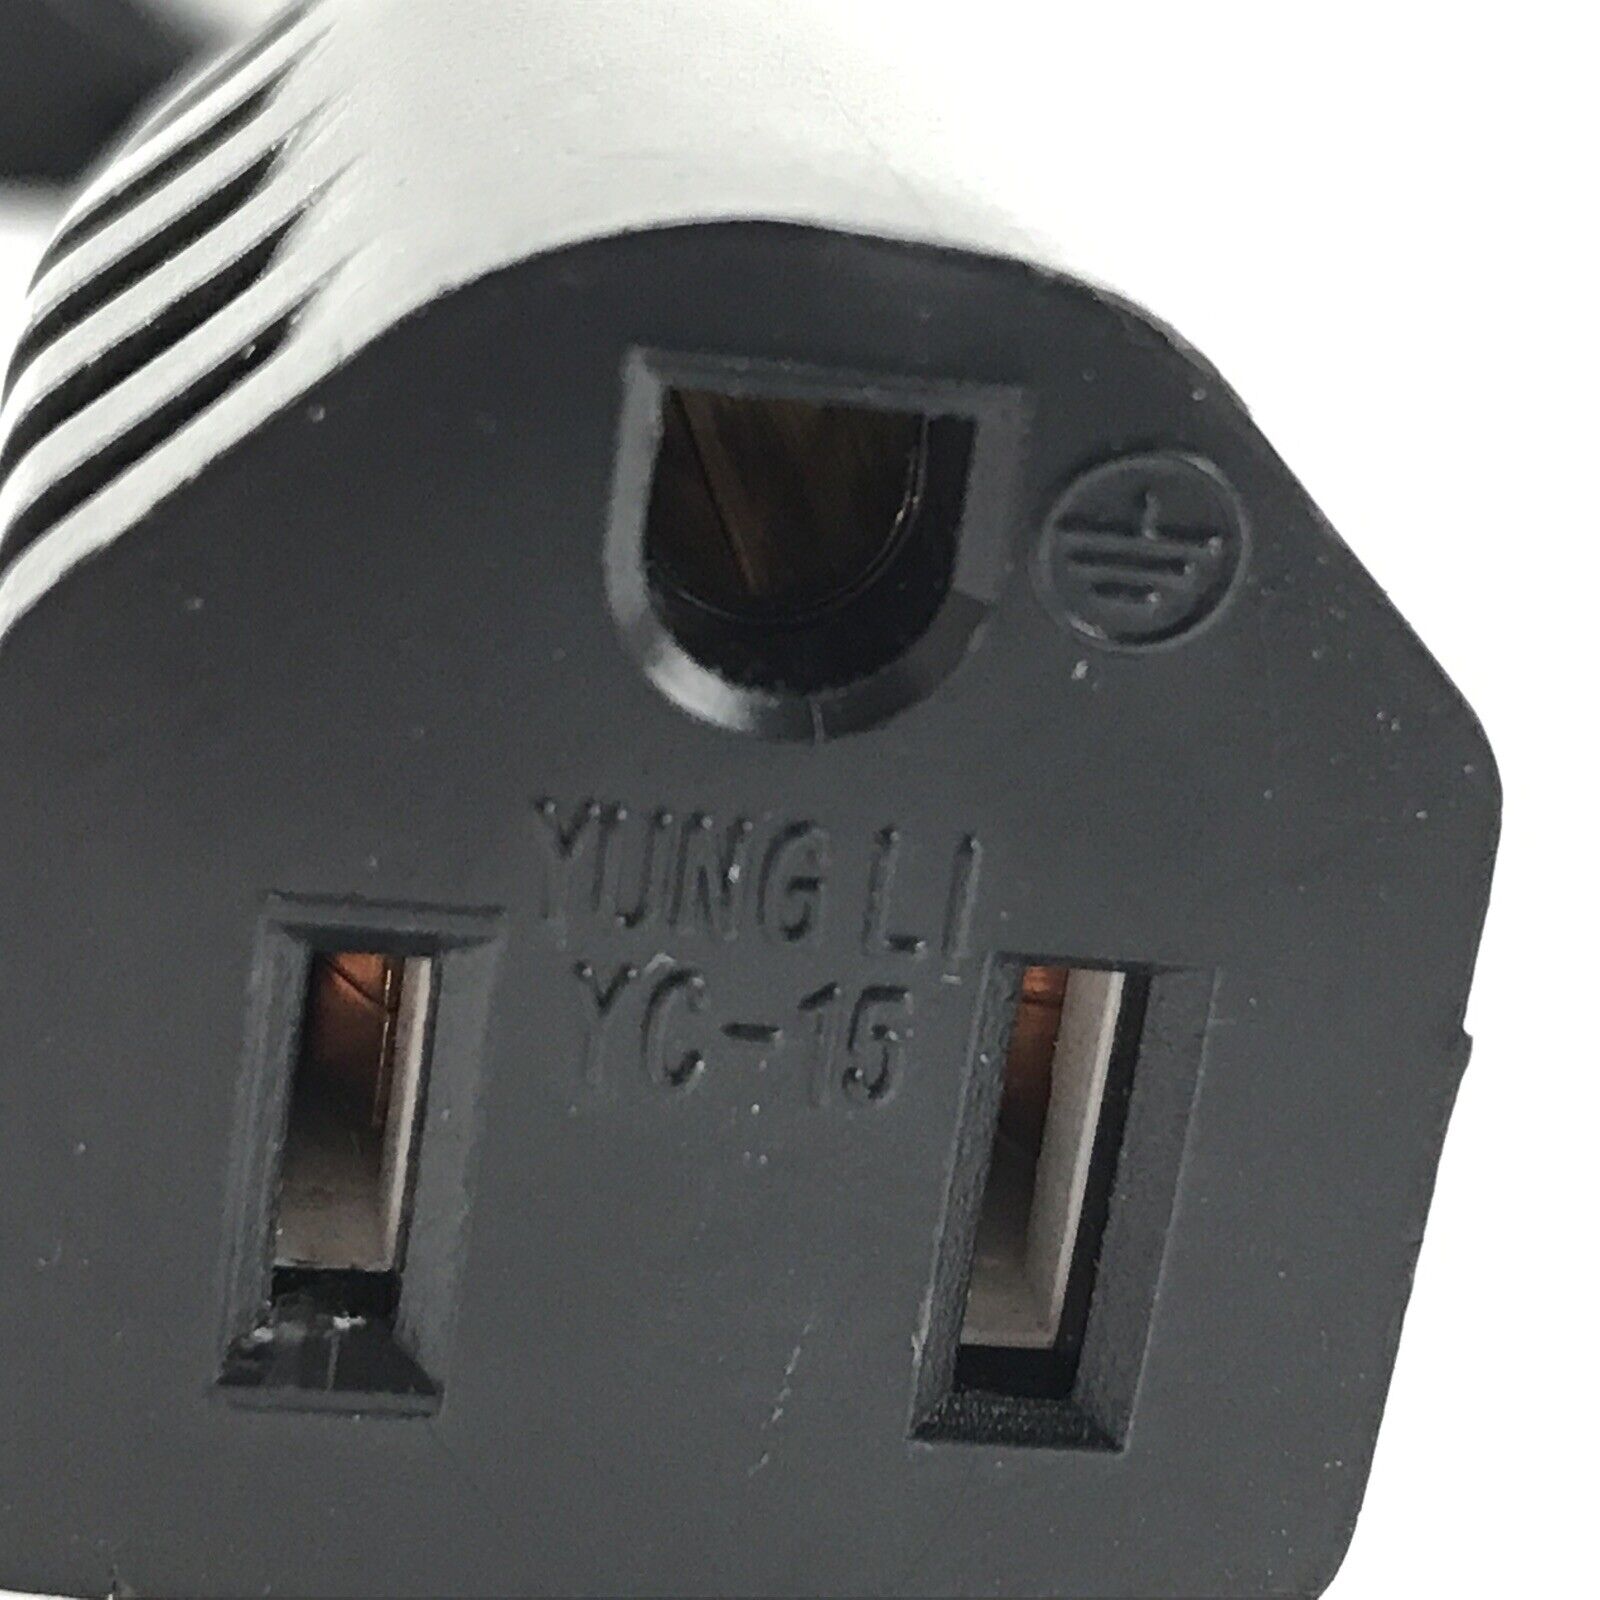 Yung LI YC-15 13A 125V E152635 Pass Through Wall Plug